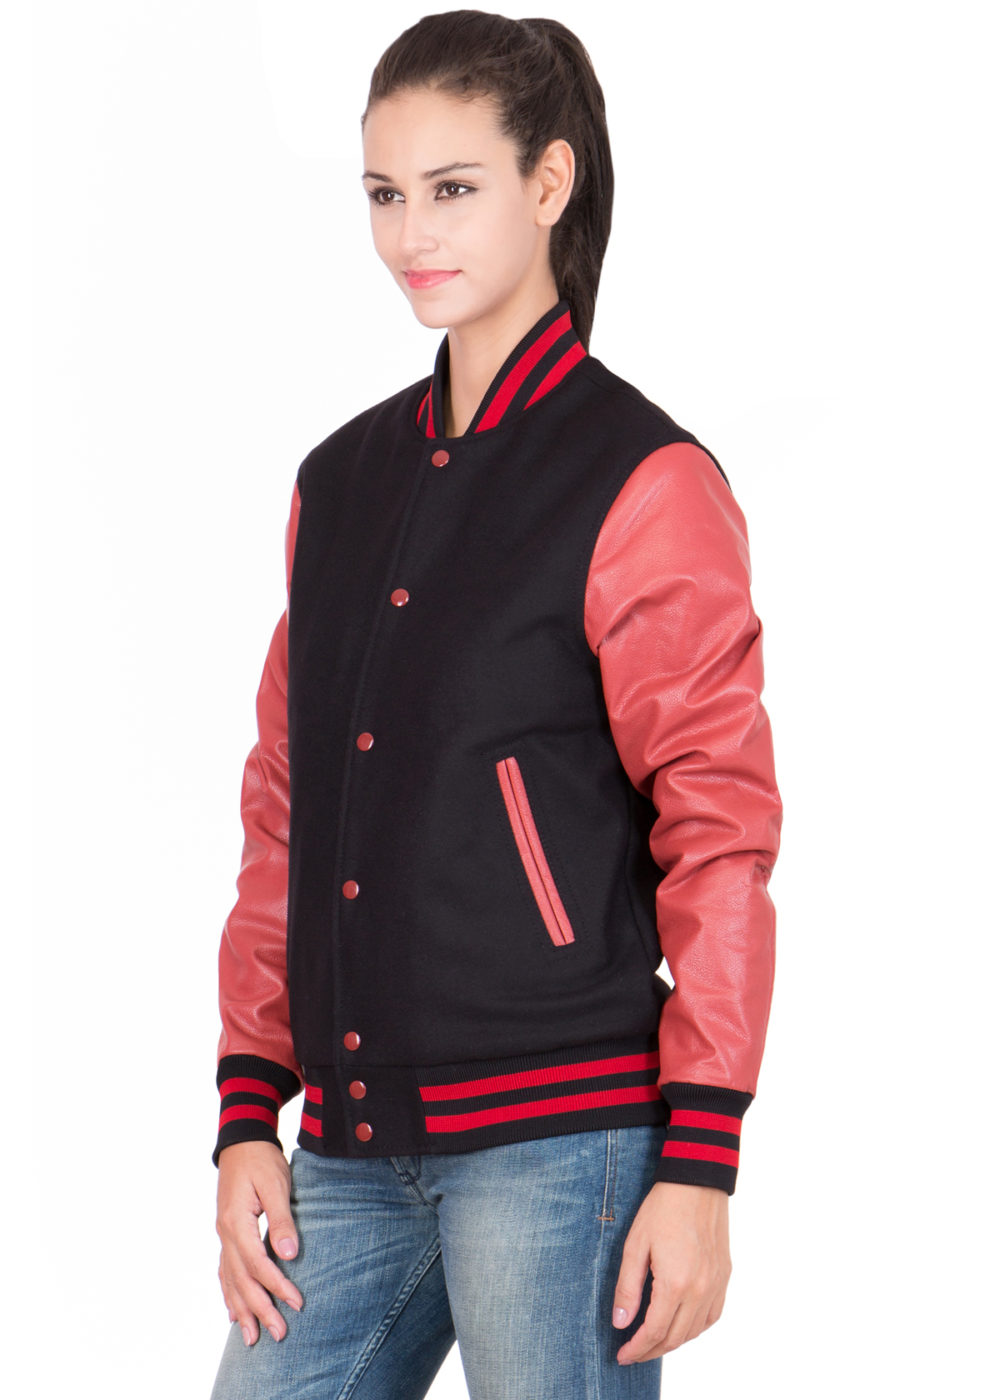 Varsity Base Scarlet Red Wool Body & Black Leather Sleeves Letterman Jacket , 4XL